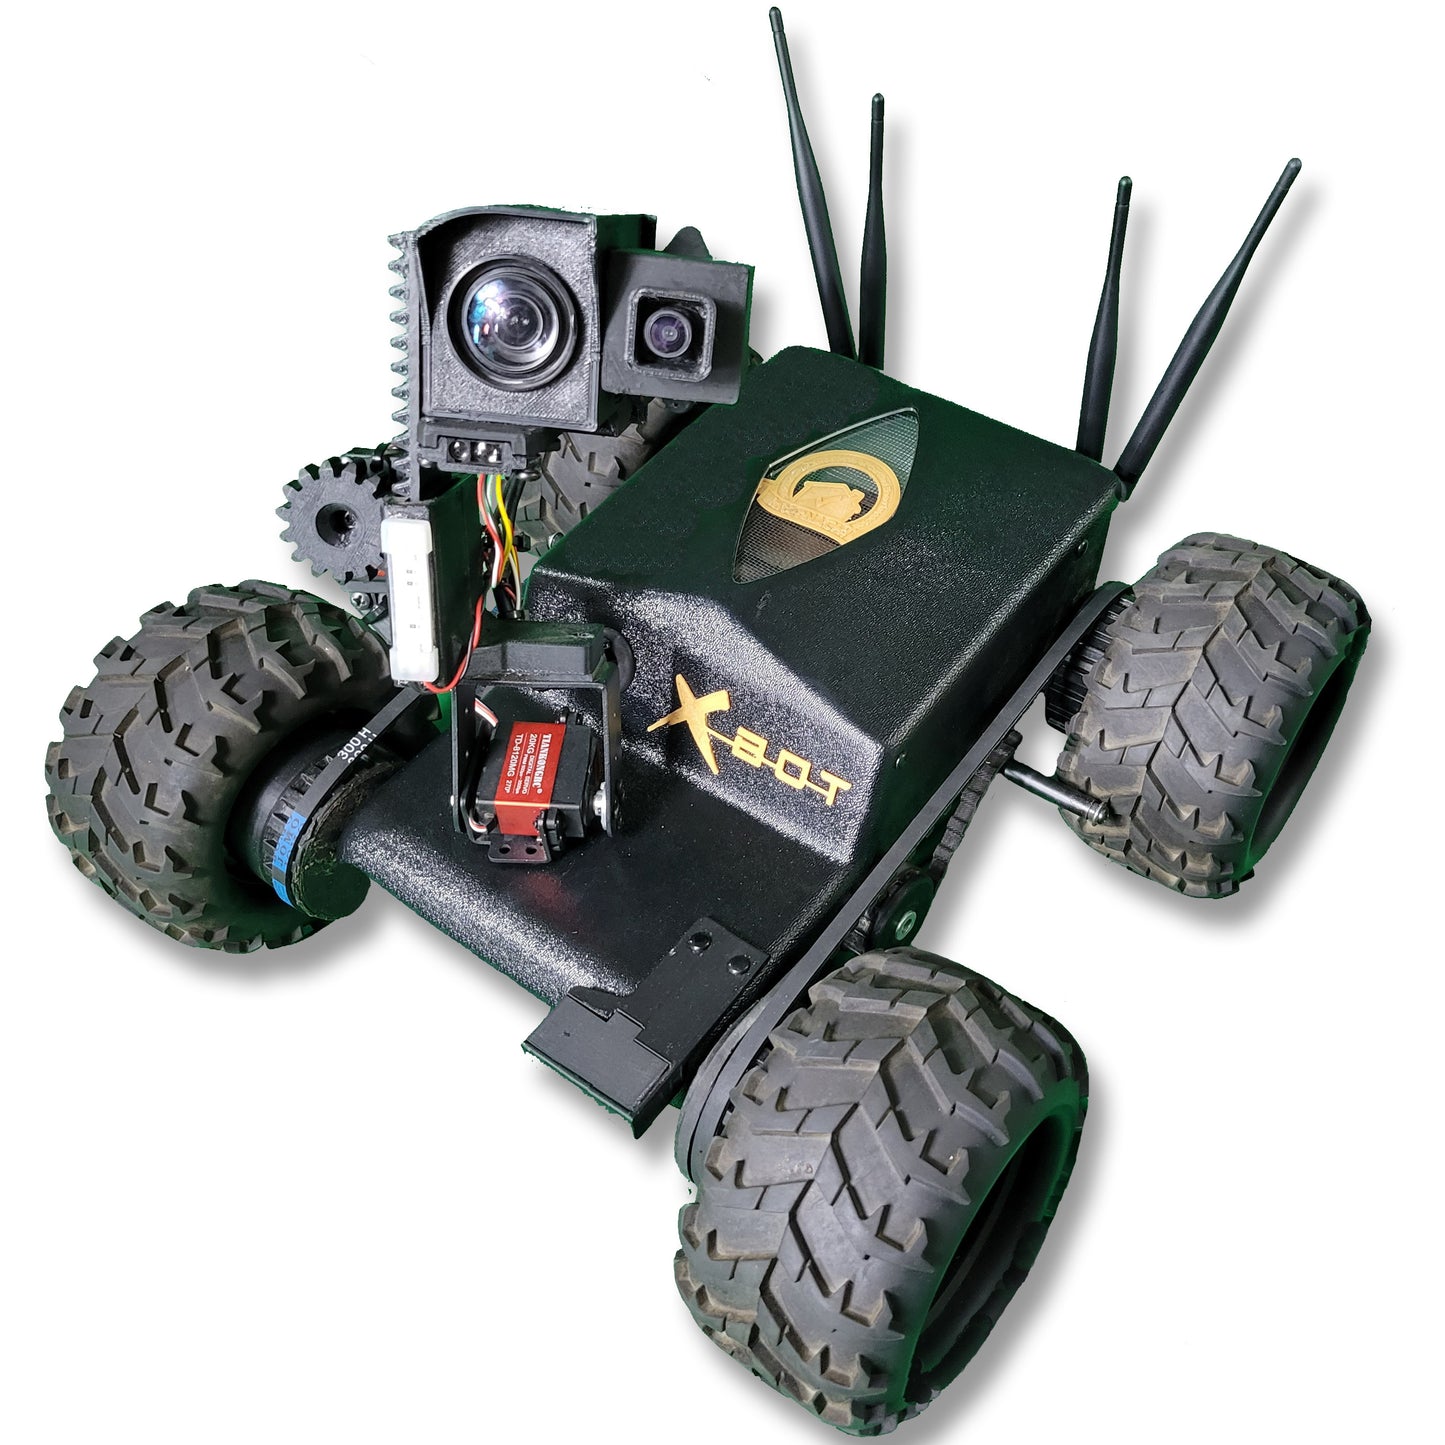 TOBOR X-BOT Xtreme Inspection Crawler Robot